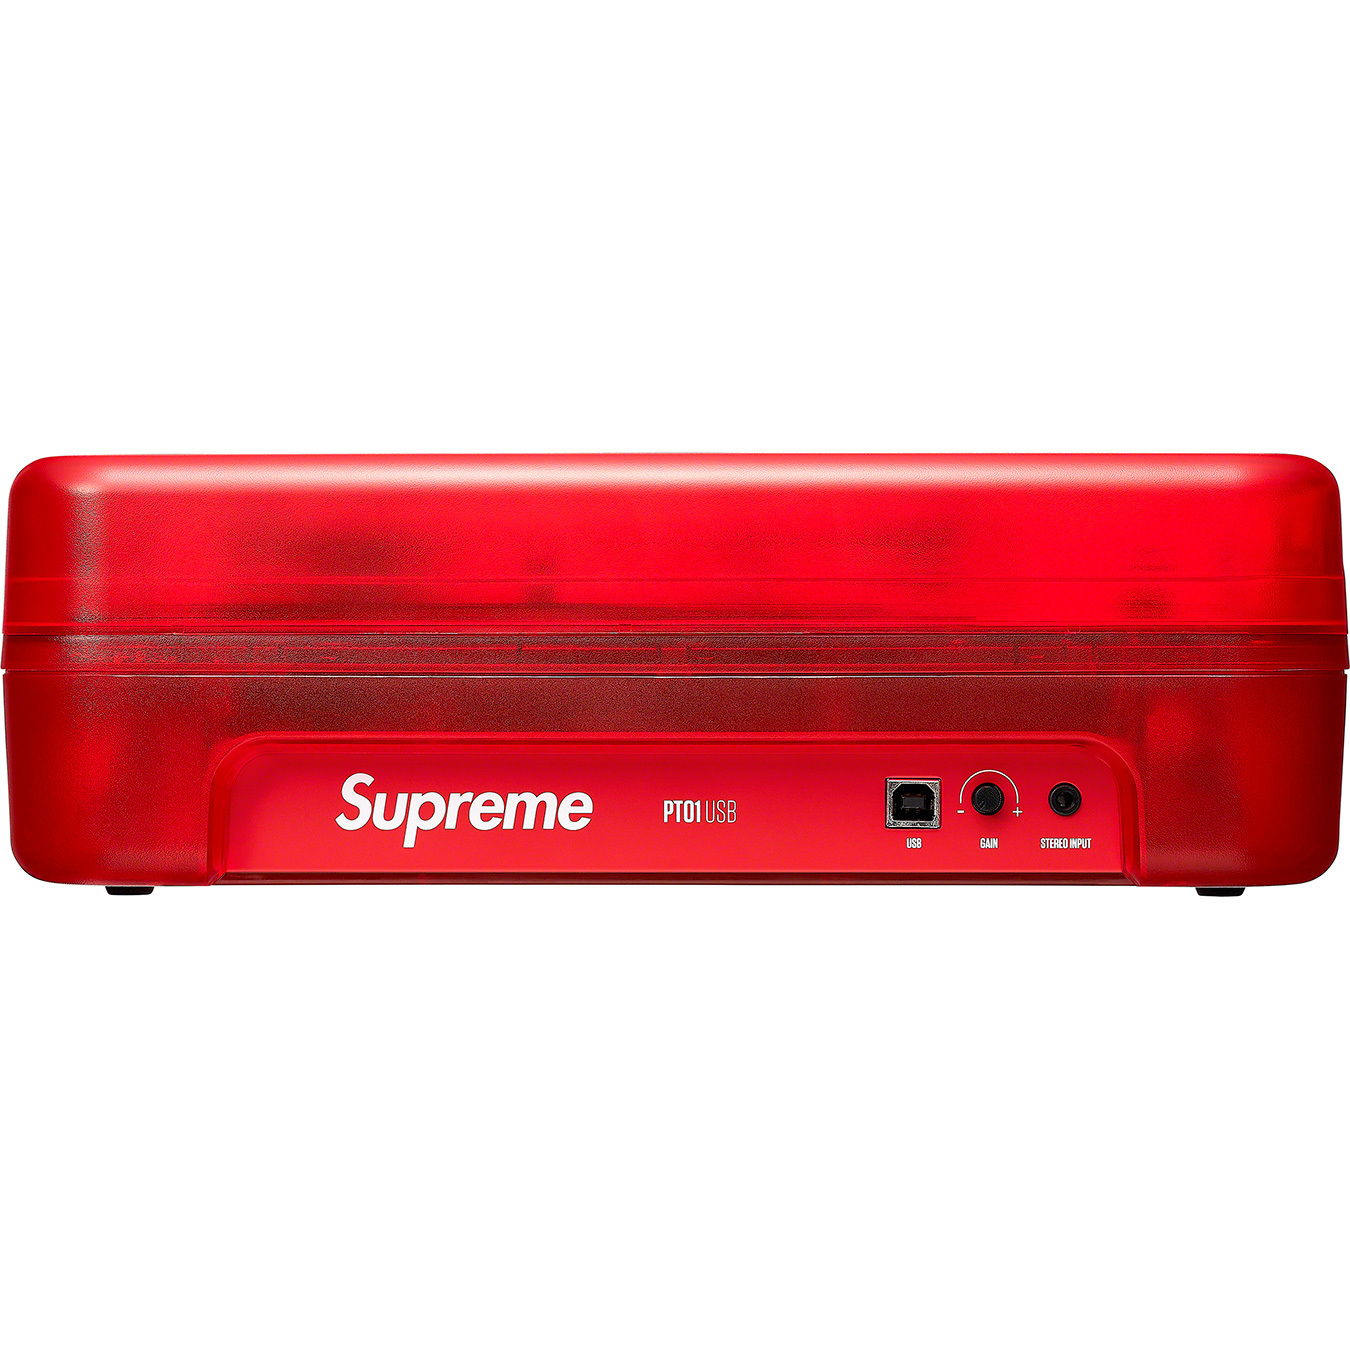 Supreme®/Numark® PT01 Portable Turntable